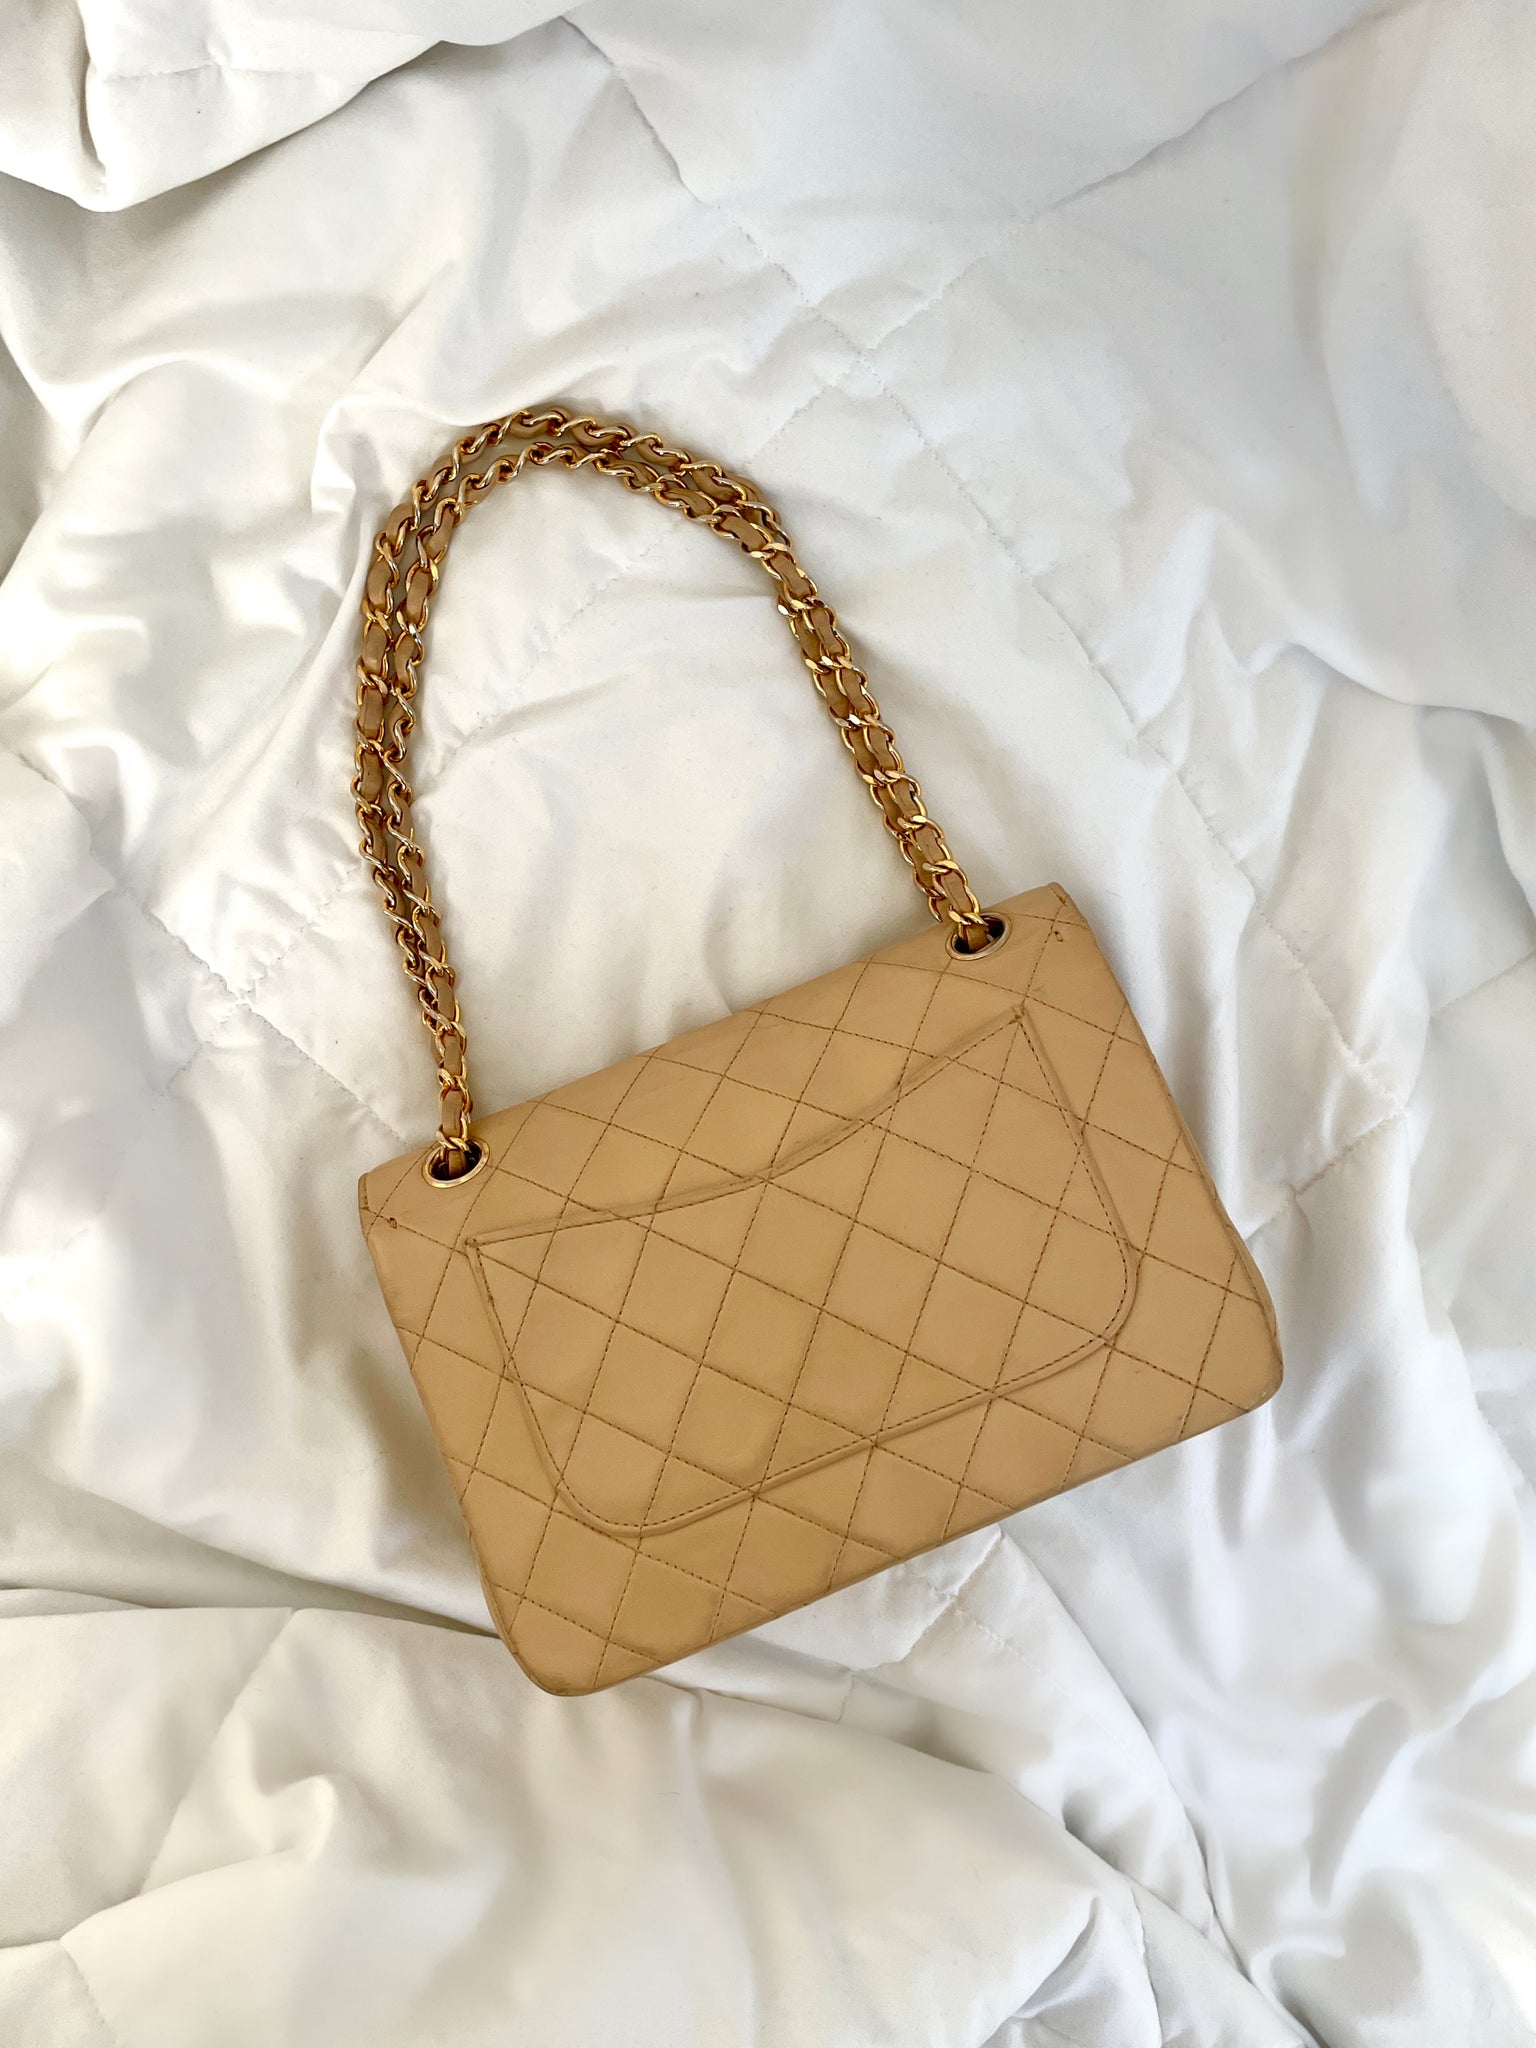 Chanel Beige Full Flap Bag